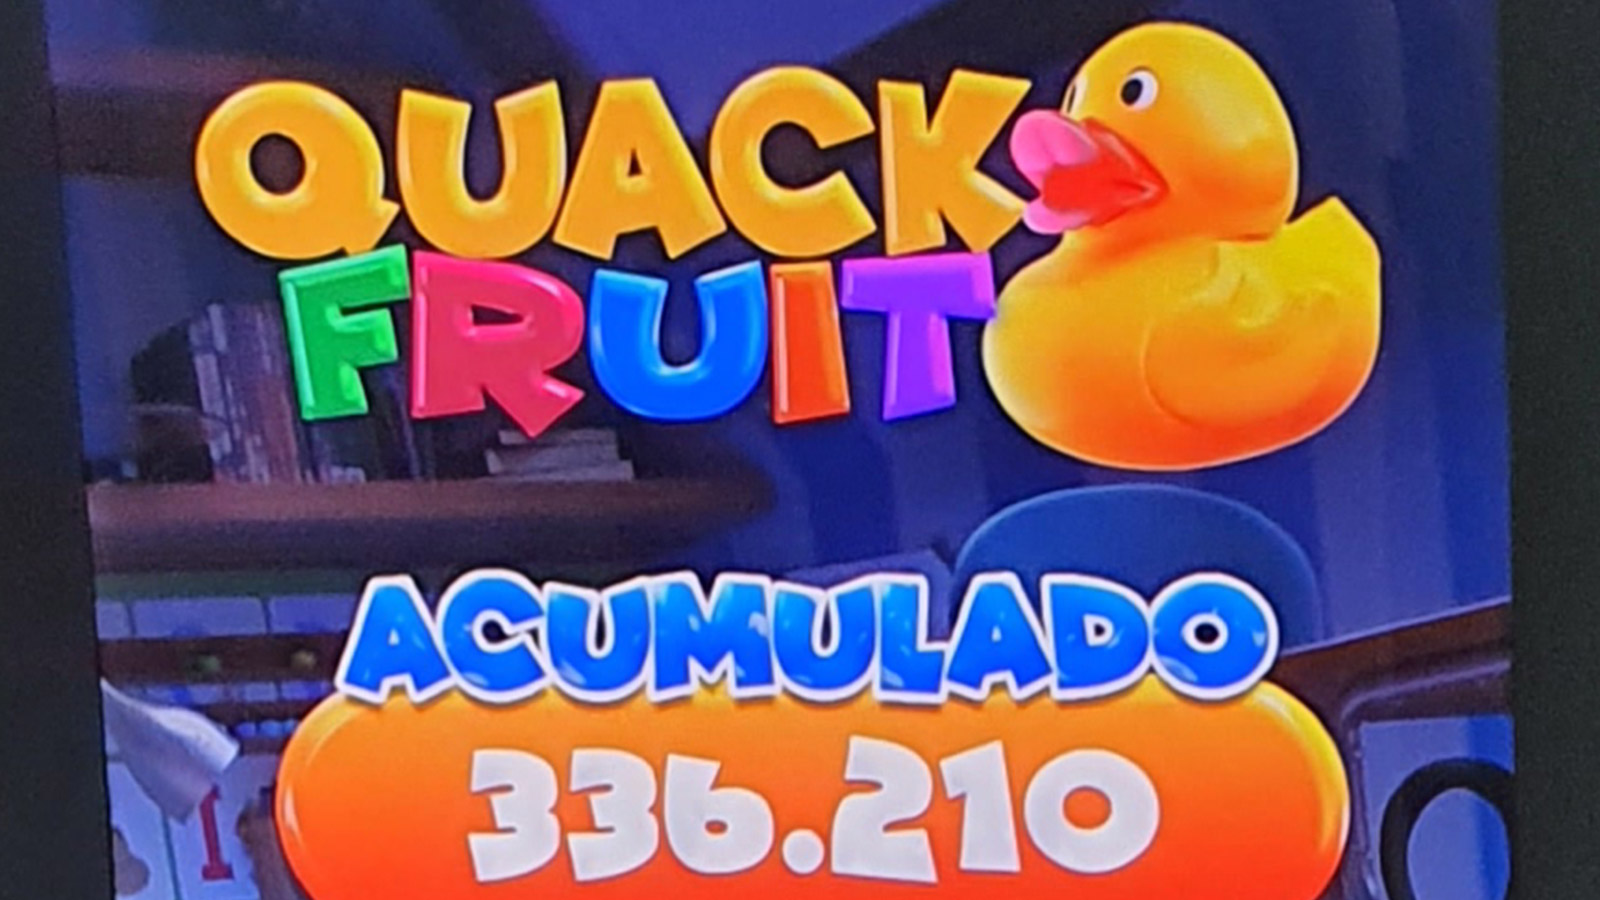 juegos-friendly-quack-fruit-1-1.jpg